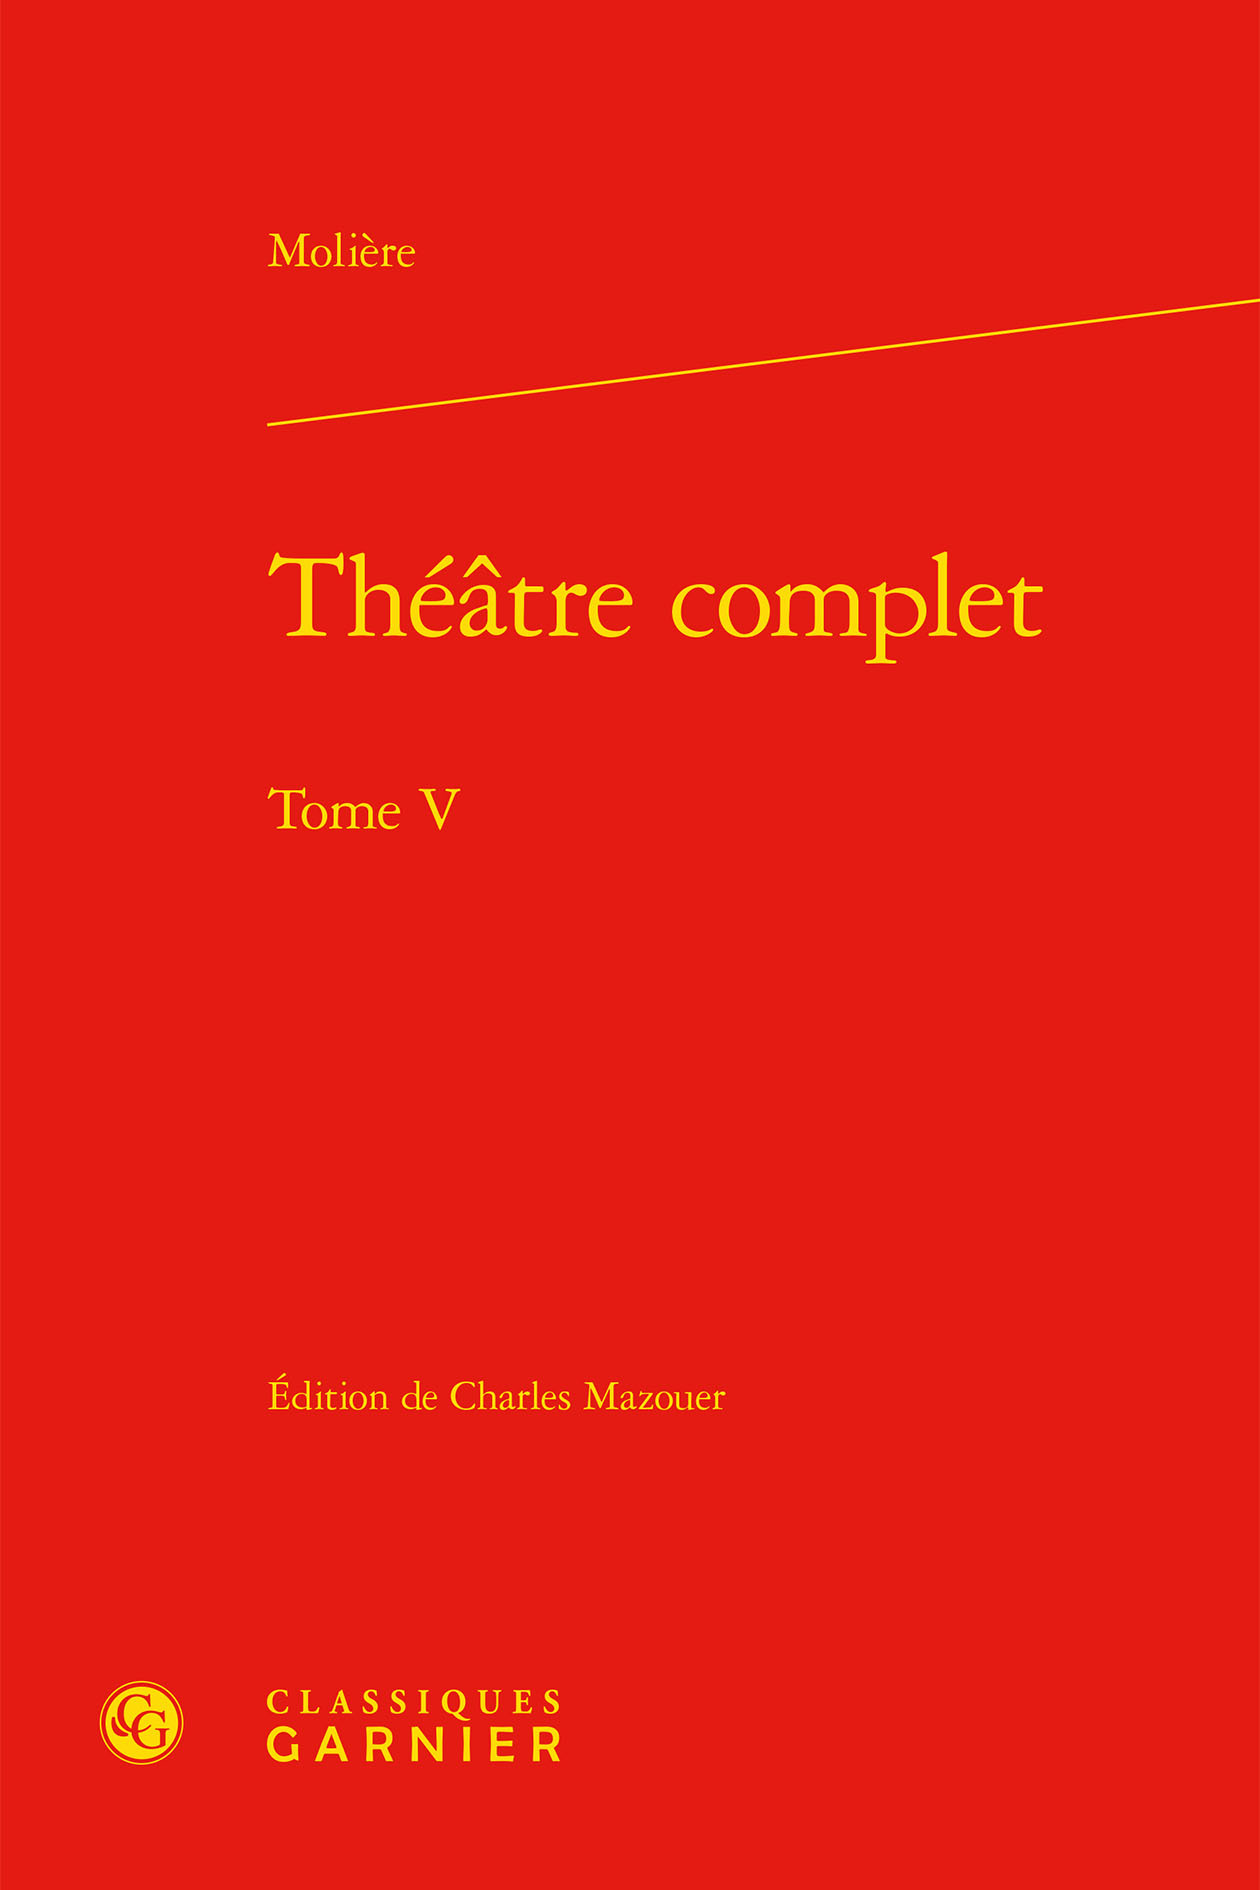 Théâtre complet (9782406111252-front-cover)